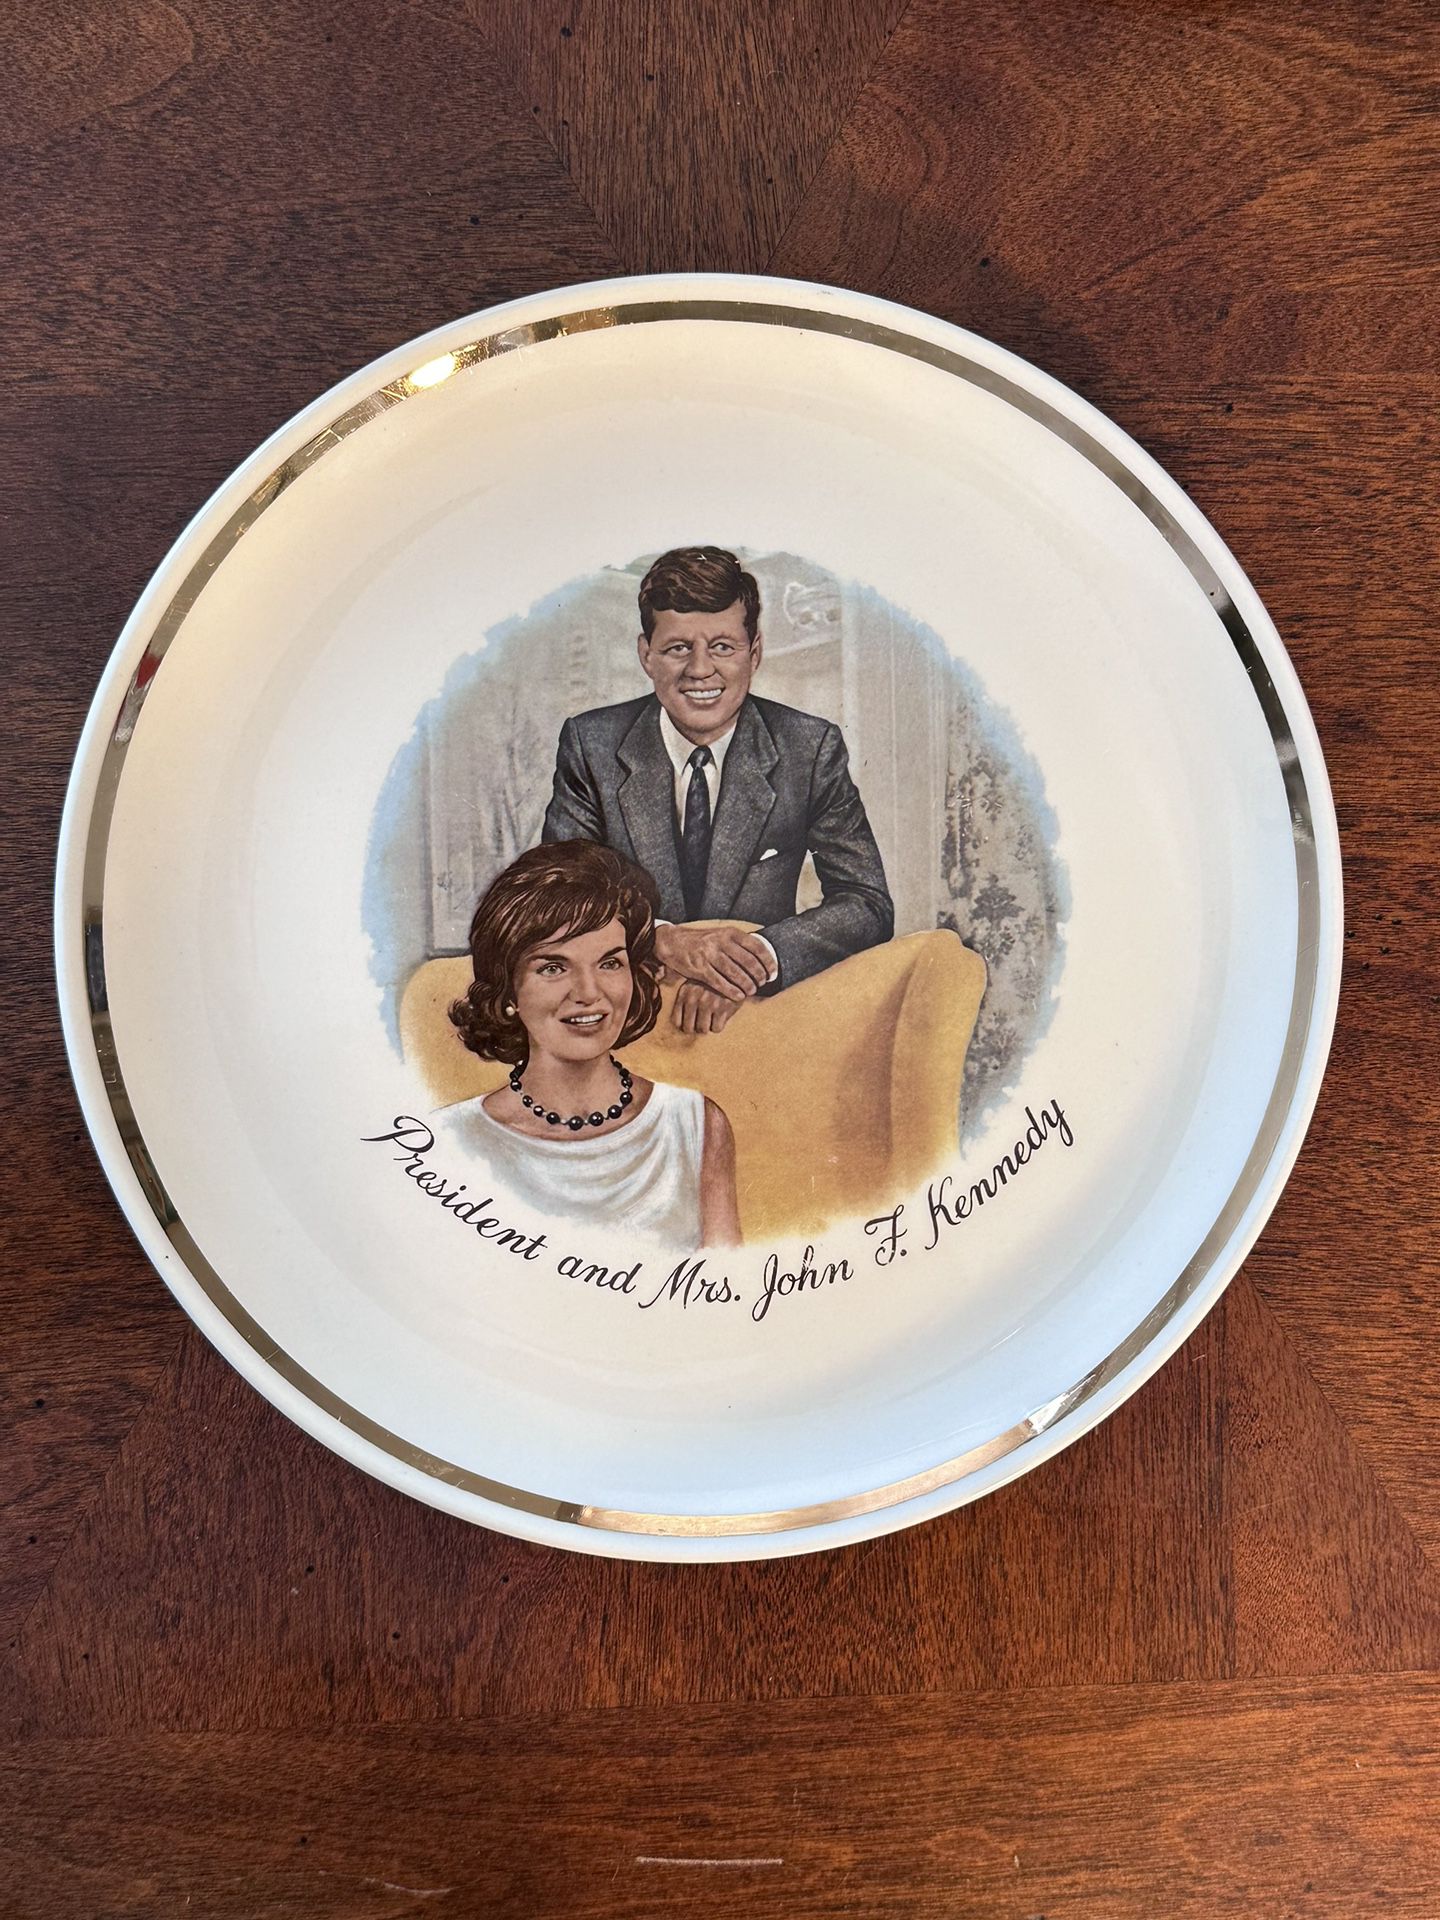 PRESIDENT AND MRS. JOHN F. KENNEDY -  Ceramic Commemorative Plate